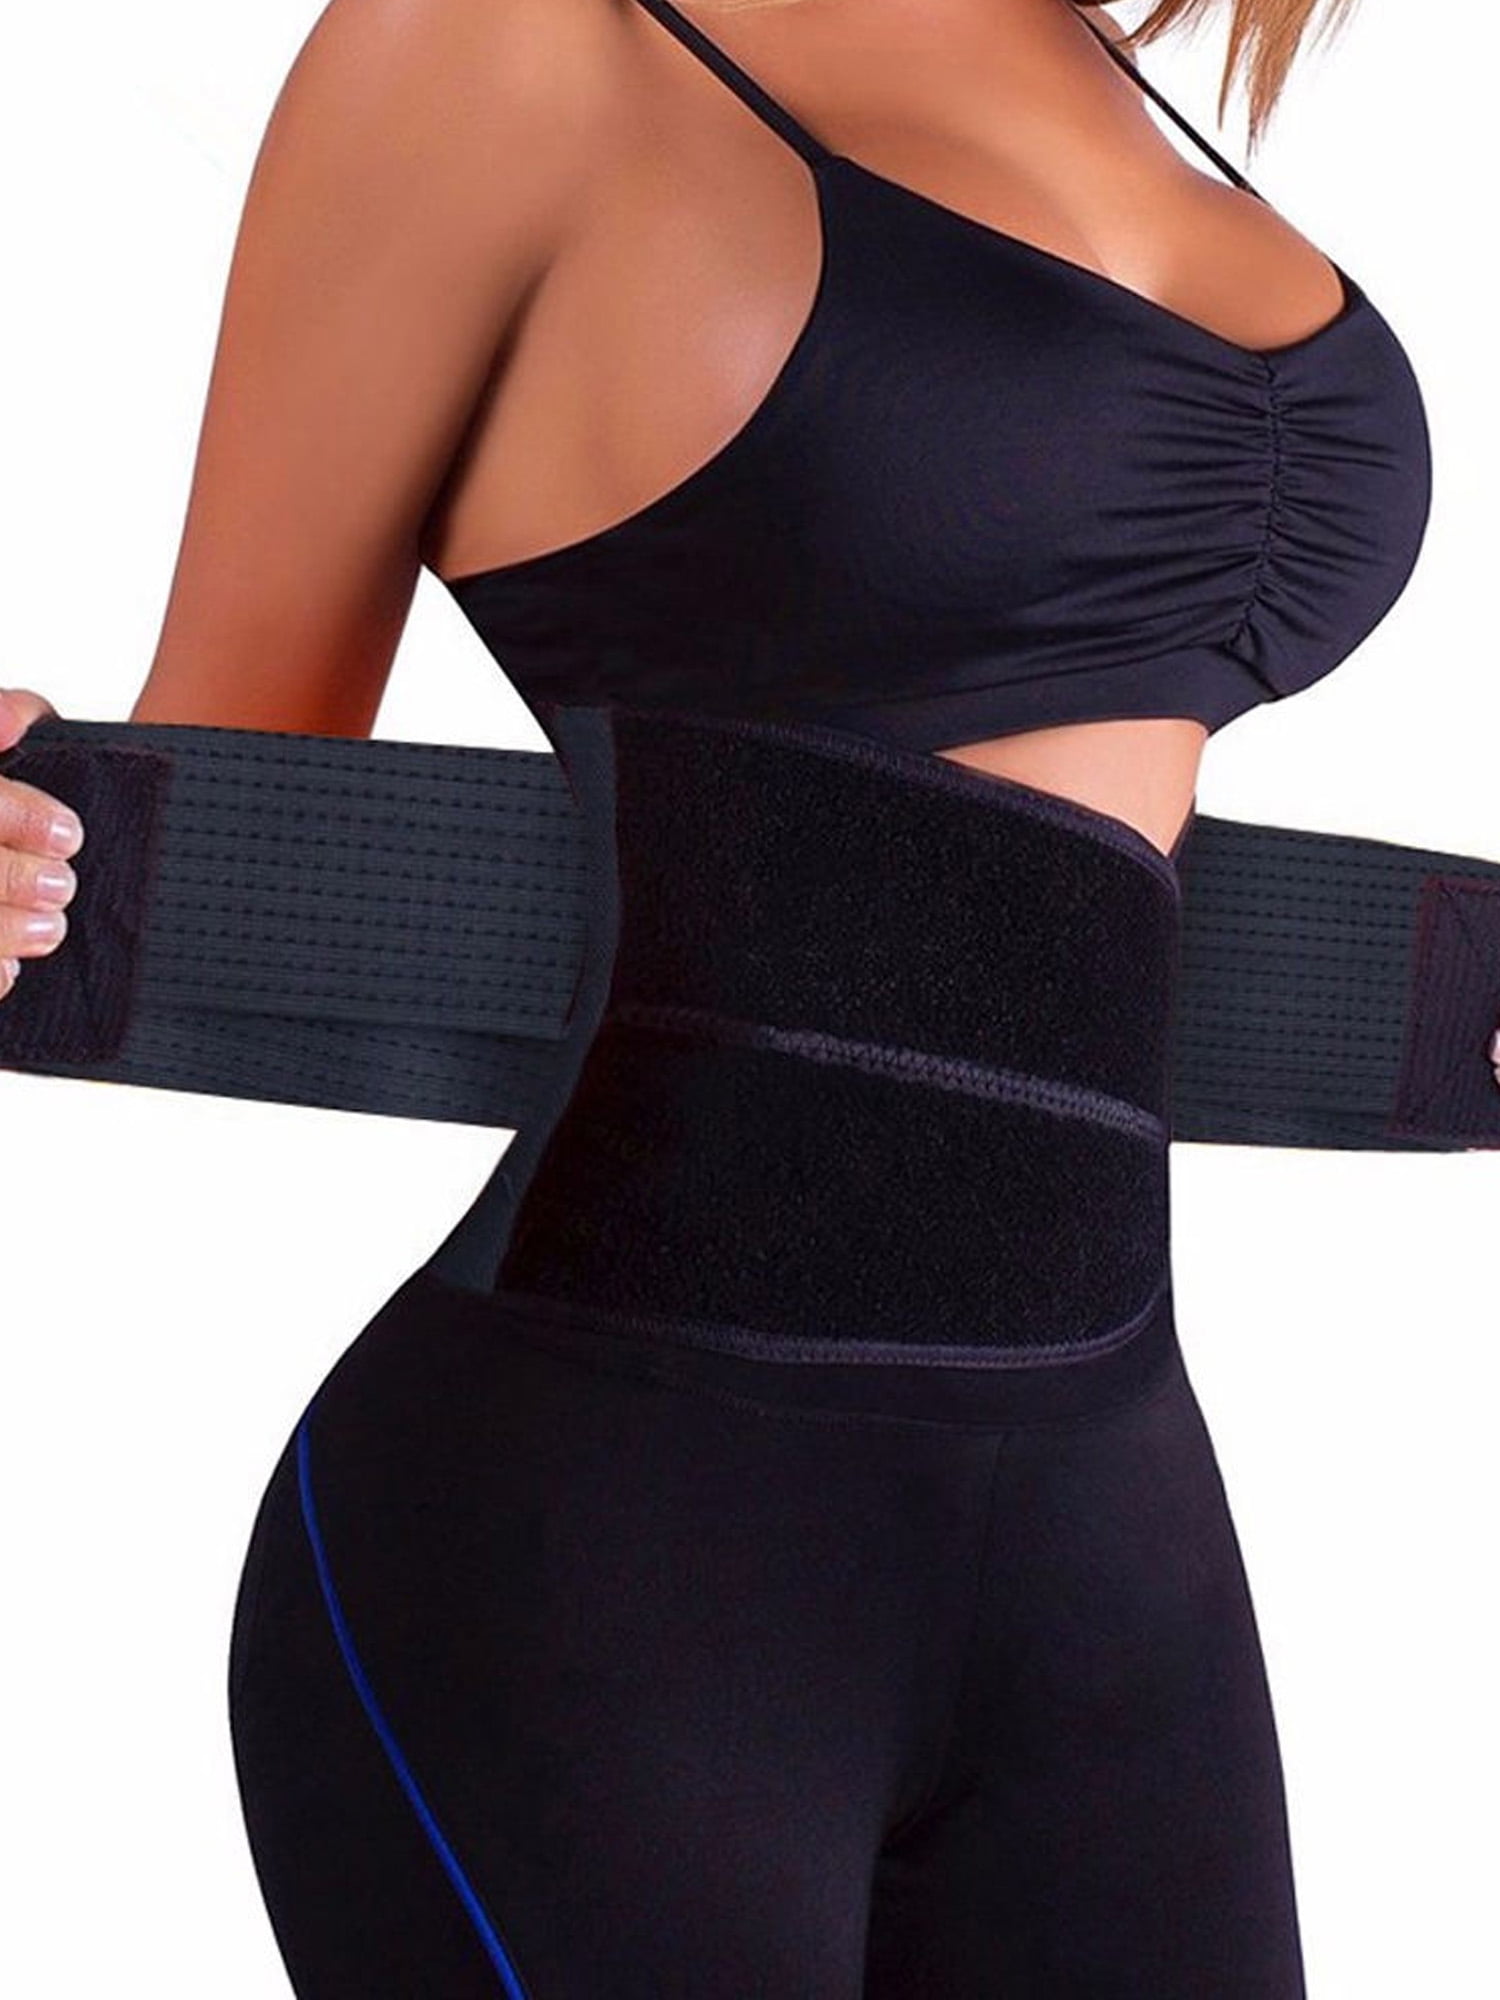 Manual Neoprene Unisex Hot Body Shaper Sweat Belt, For Gym, Waist